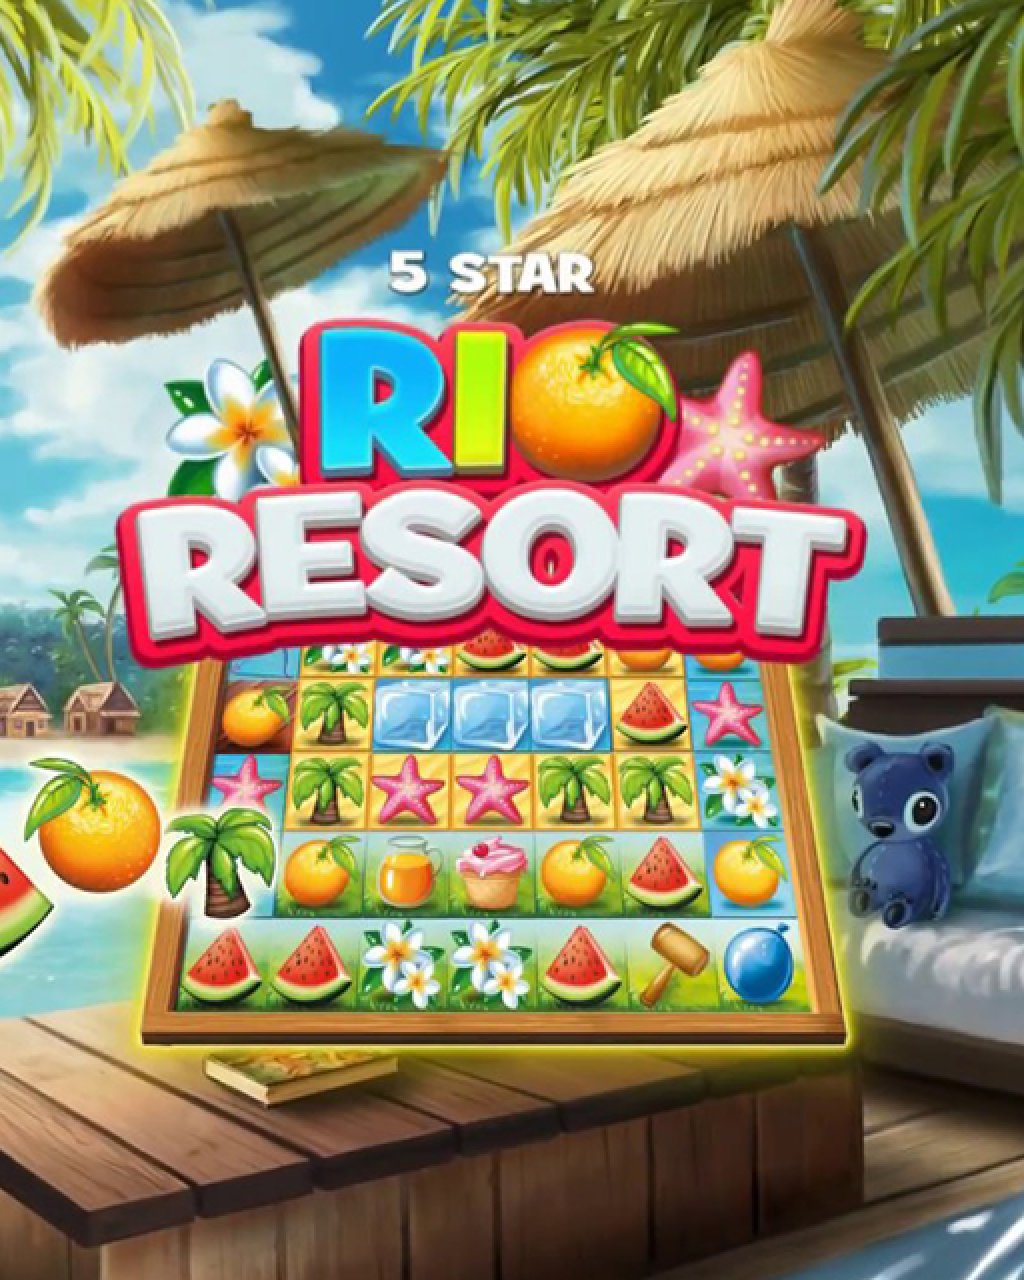 ESD 5 Star Rio Resort